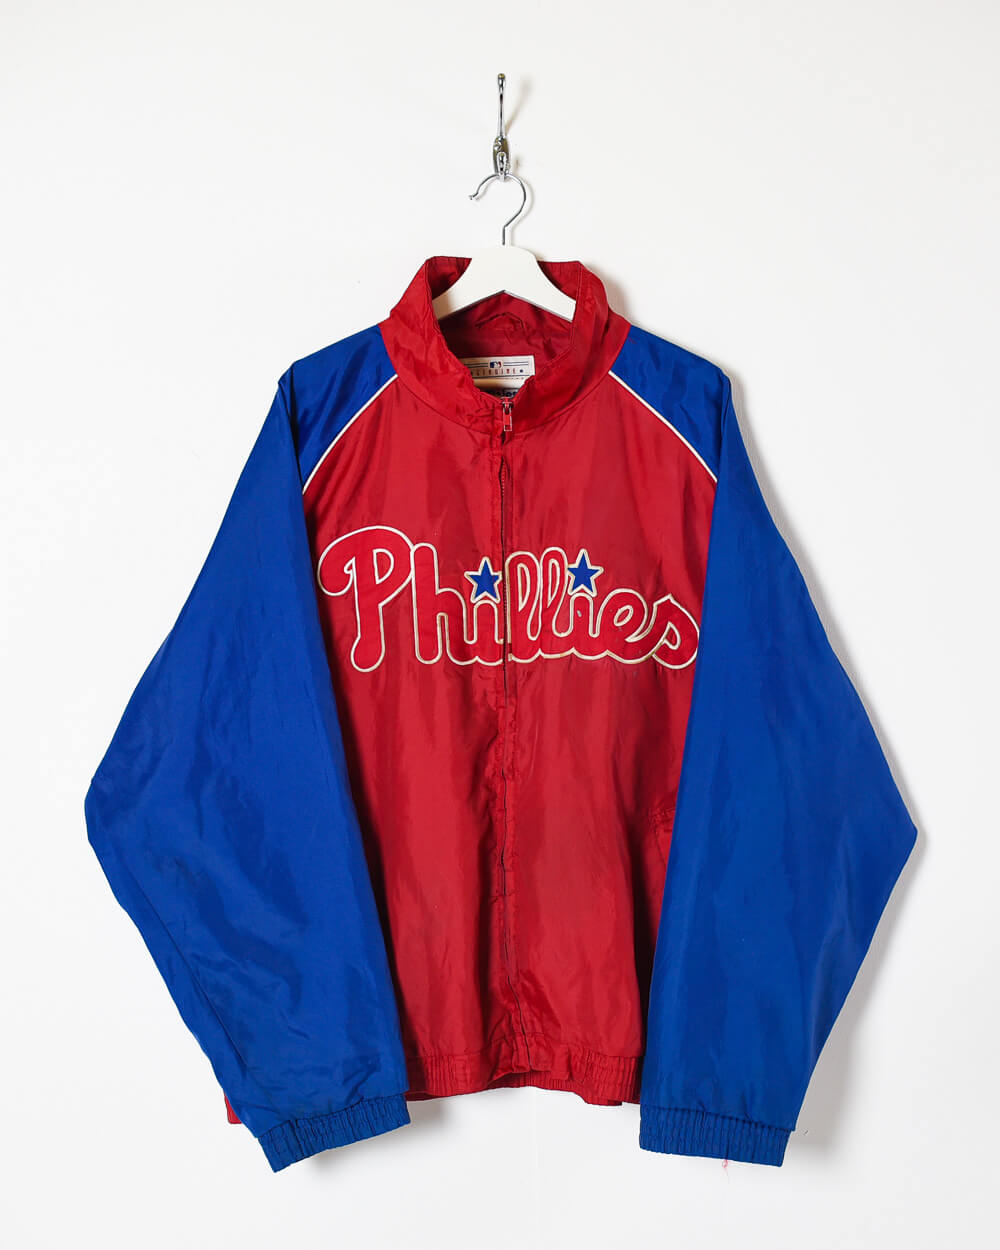 STARTER, Jackets & Coats, Retro Vintage Phillies Starter Jacket